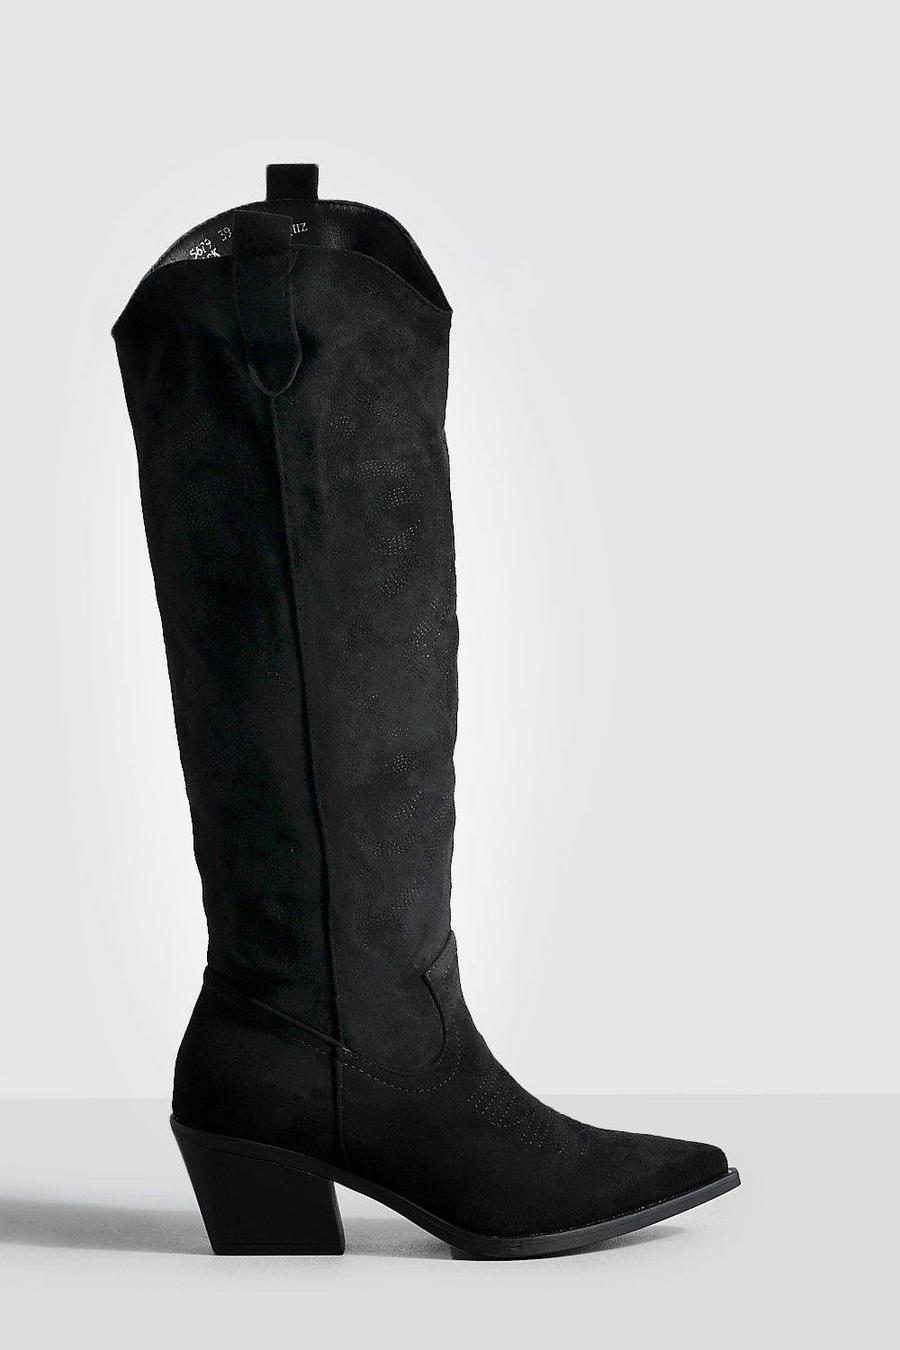 Black svart Low Heel Embroidered Knee High Western Cowboy Boots